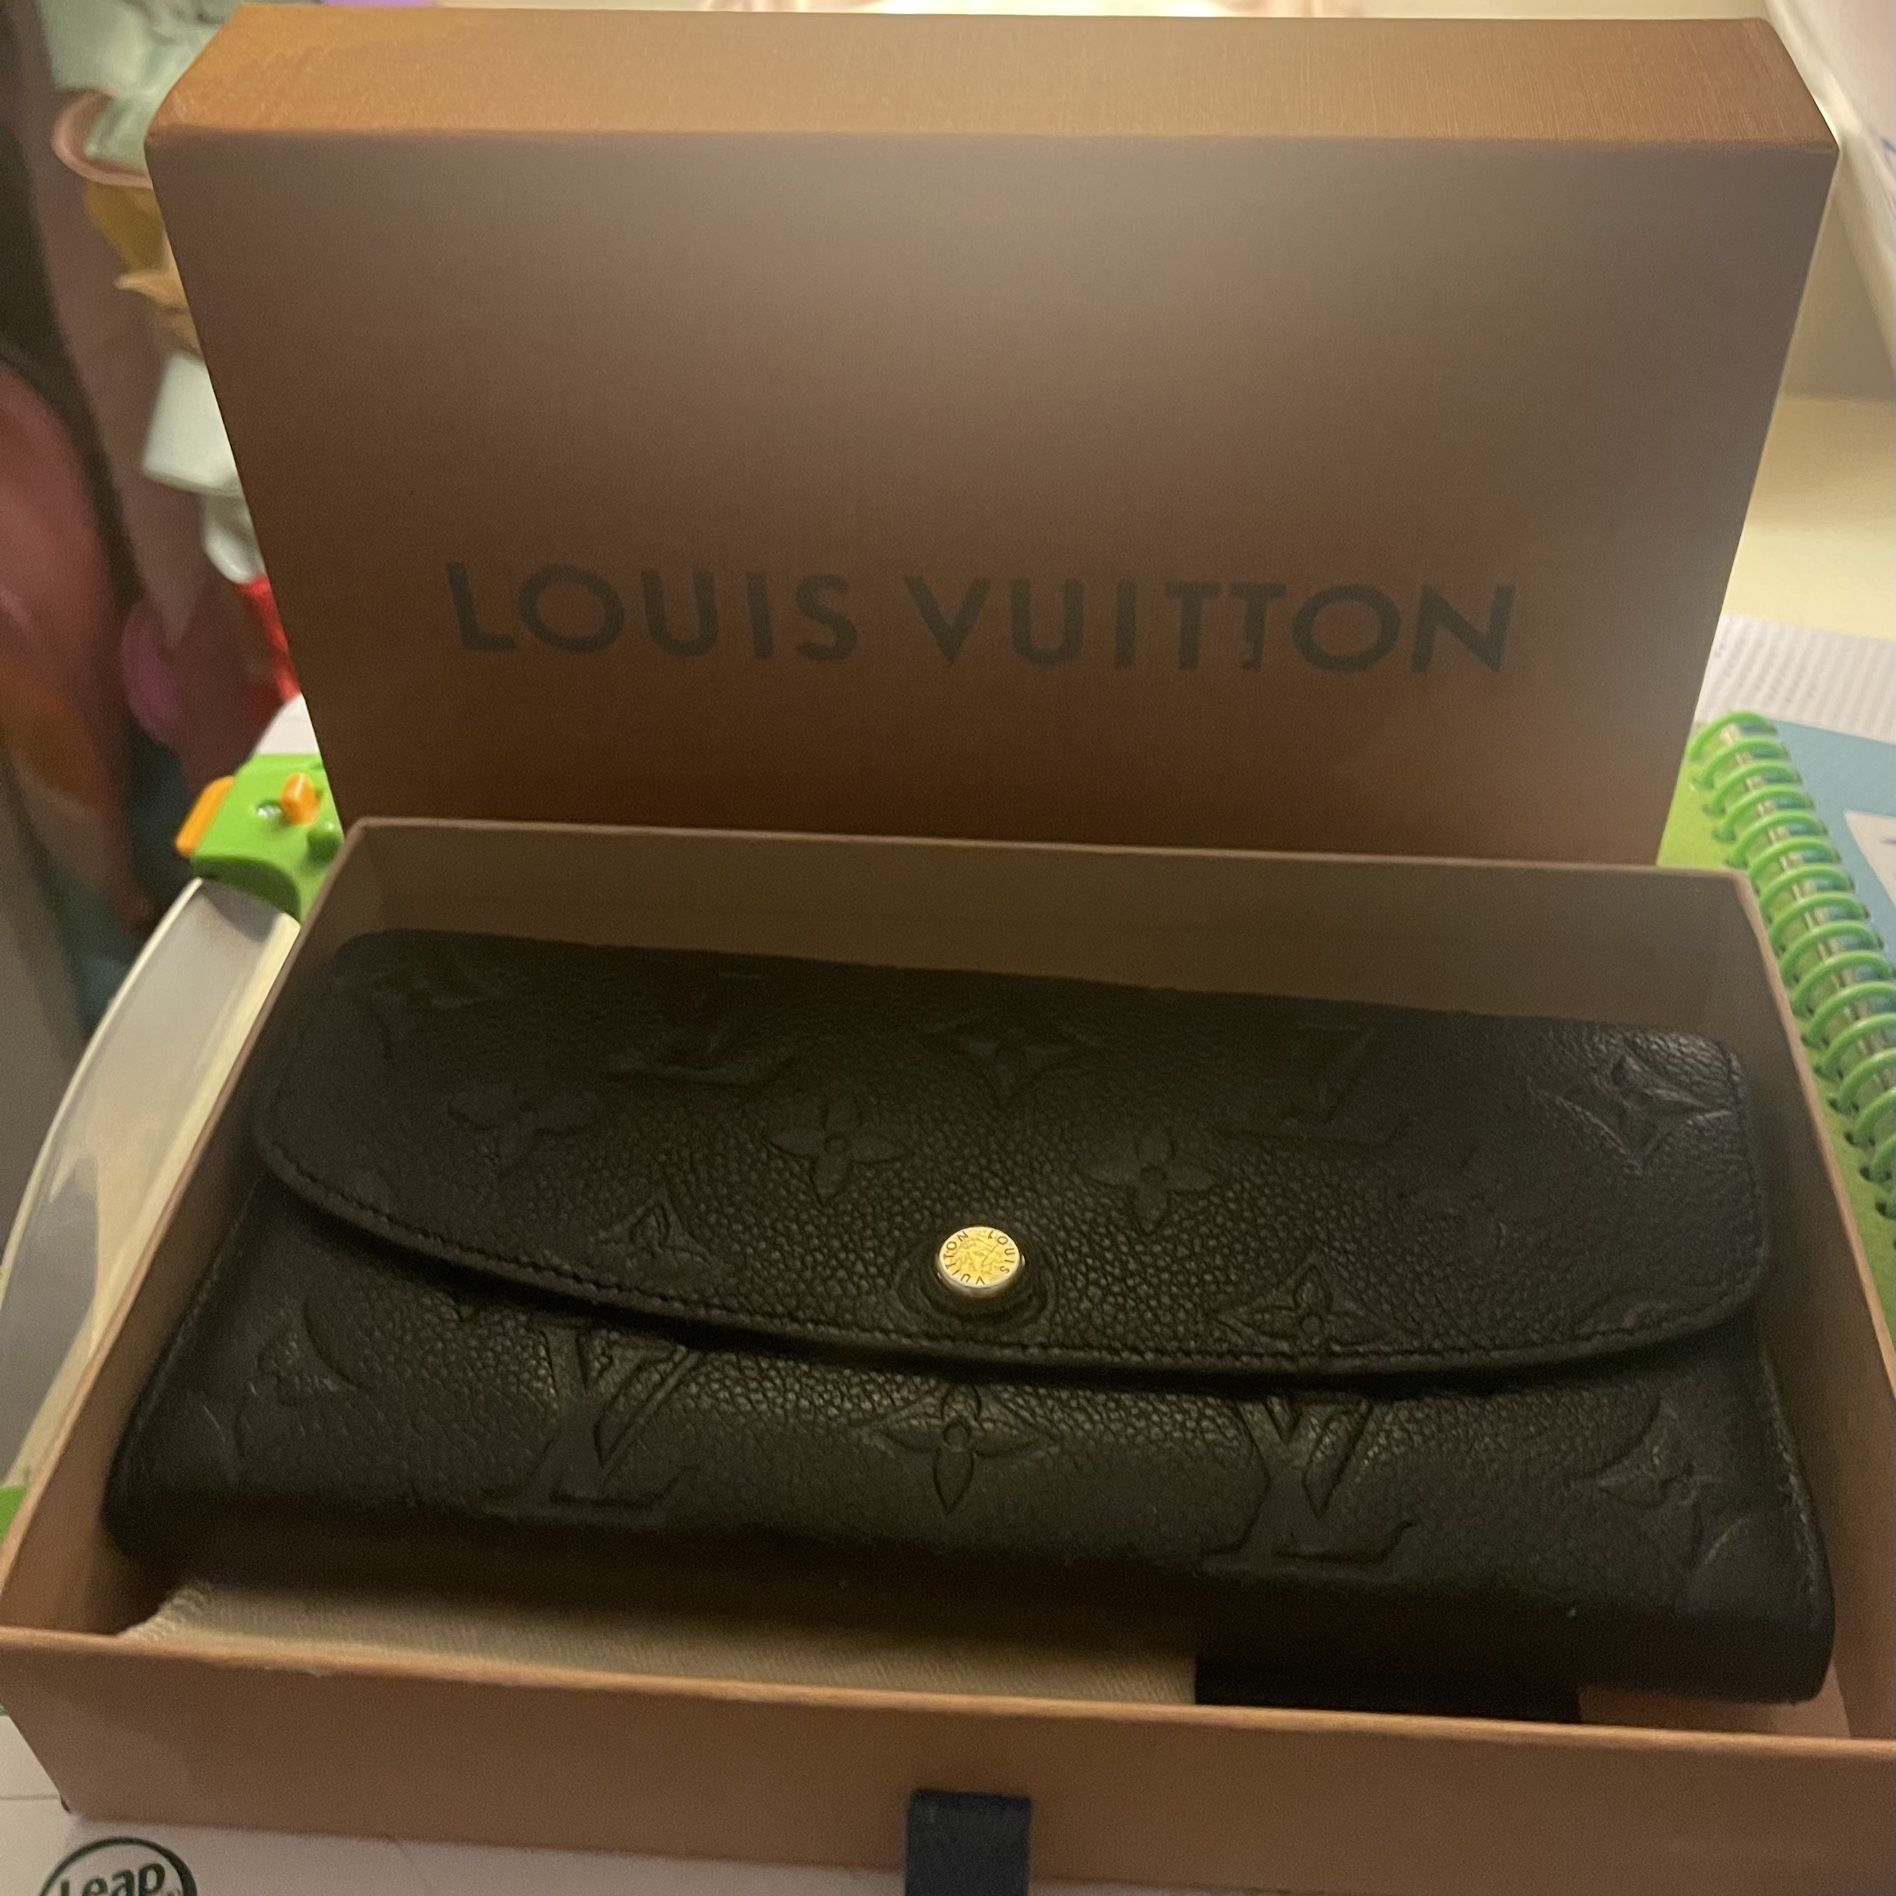 Louis Vuitton Elysee Wallet - $500 (50% Off Retail) - From Viktori